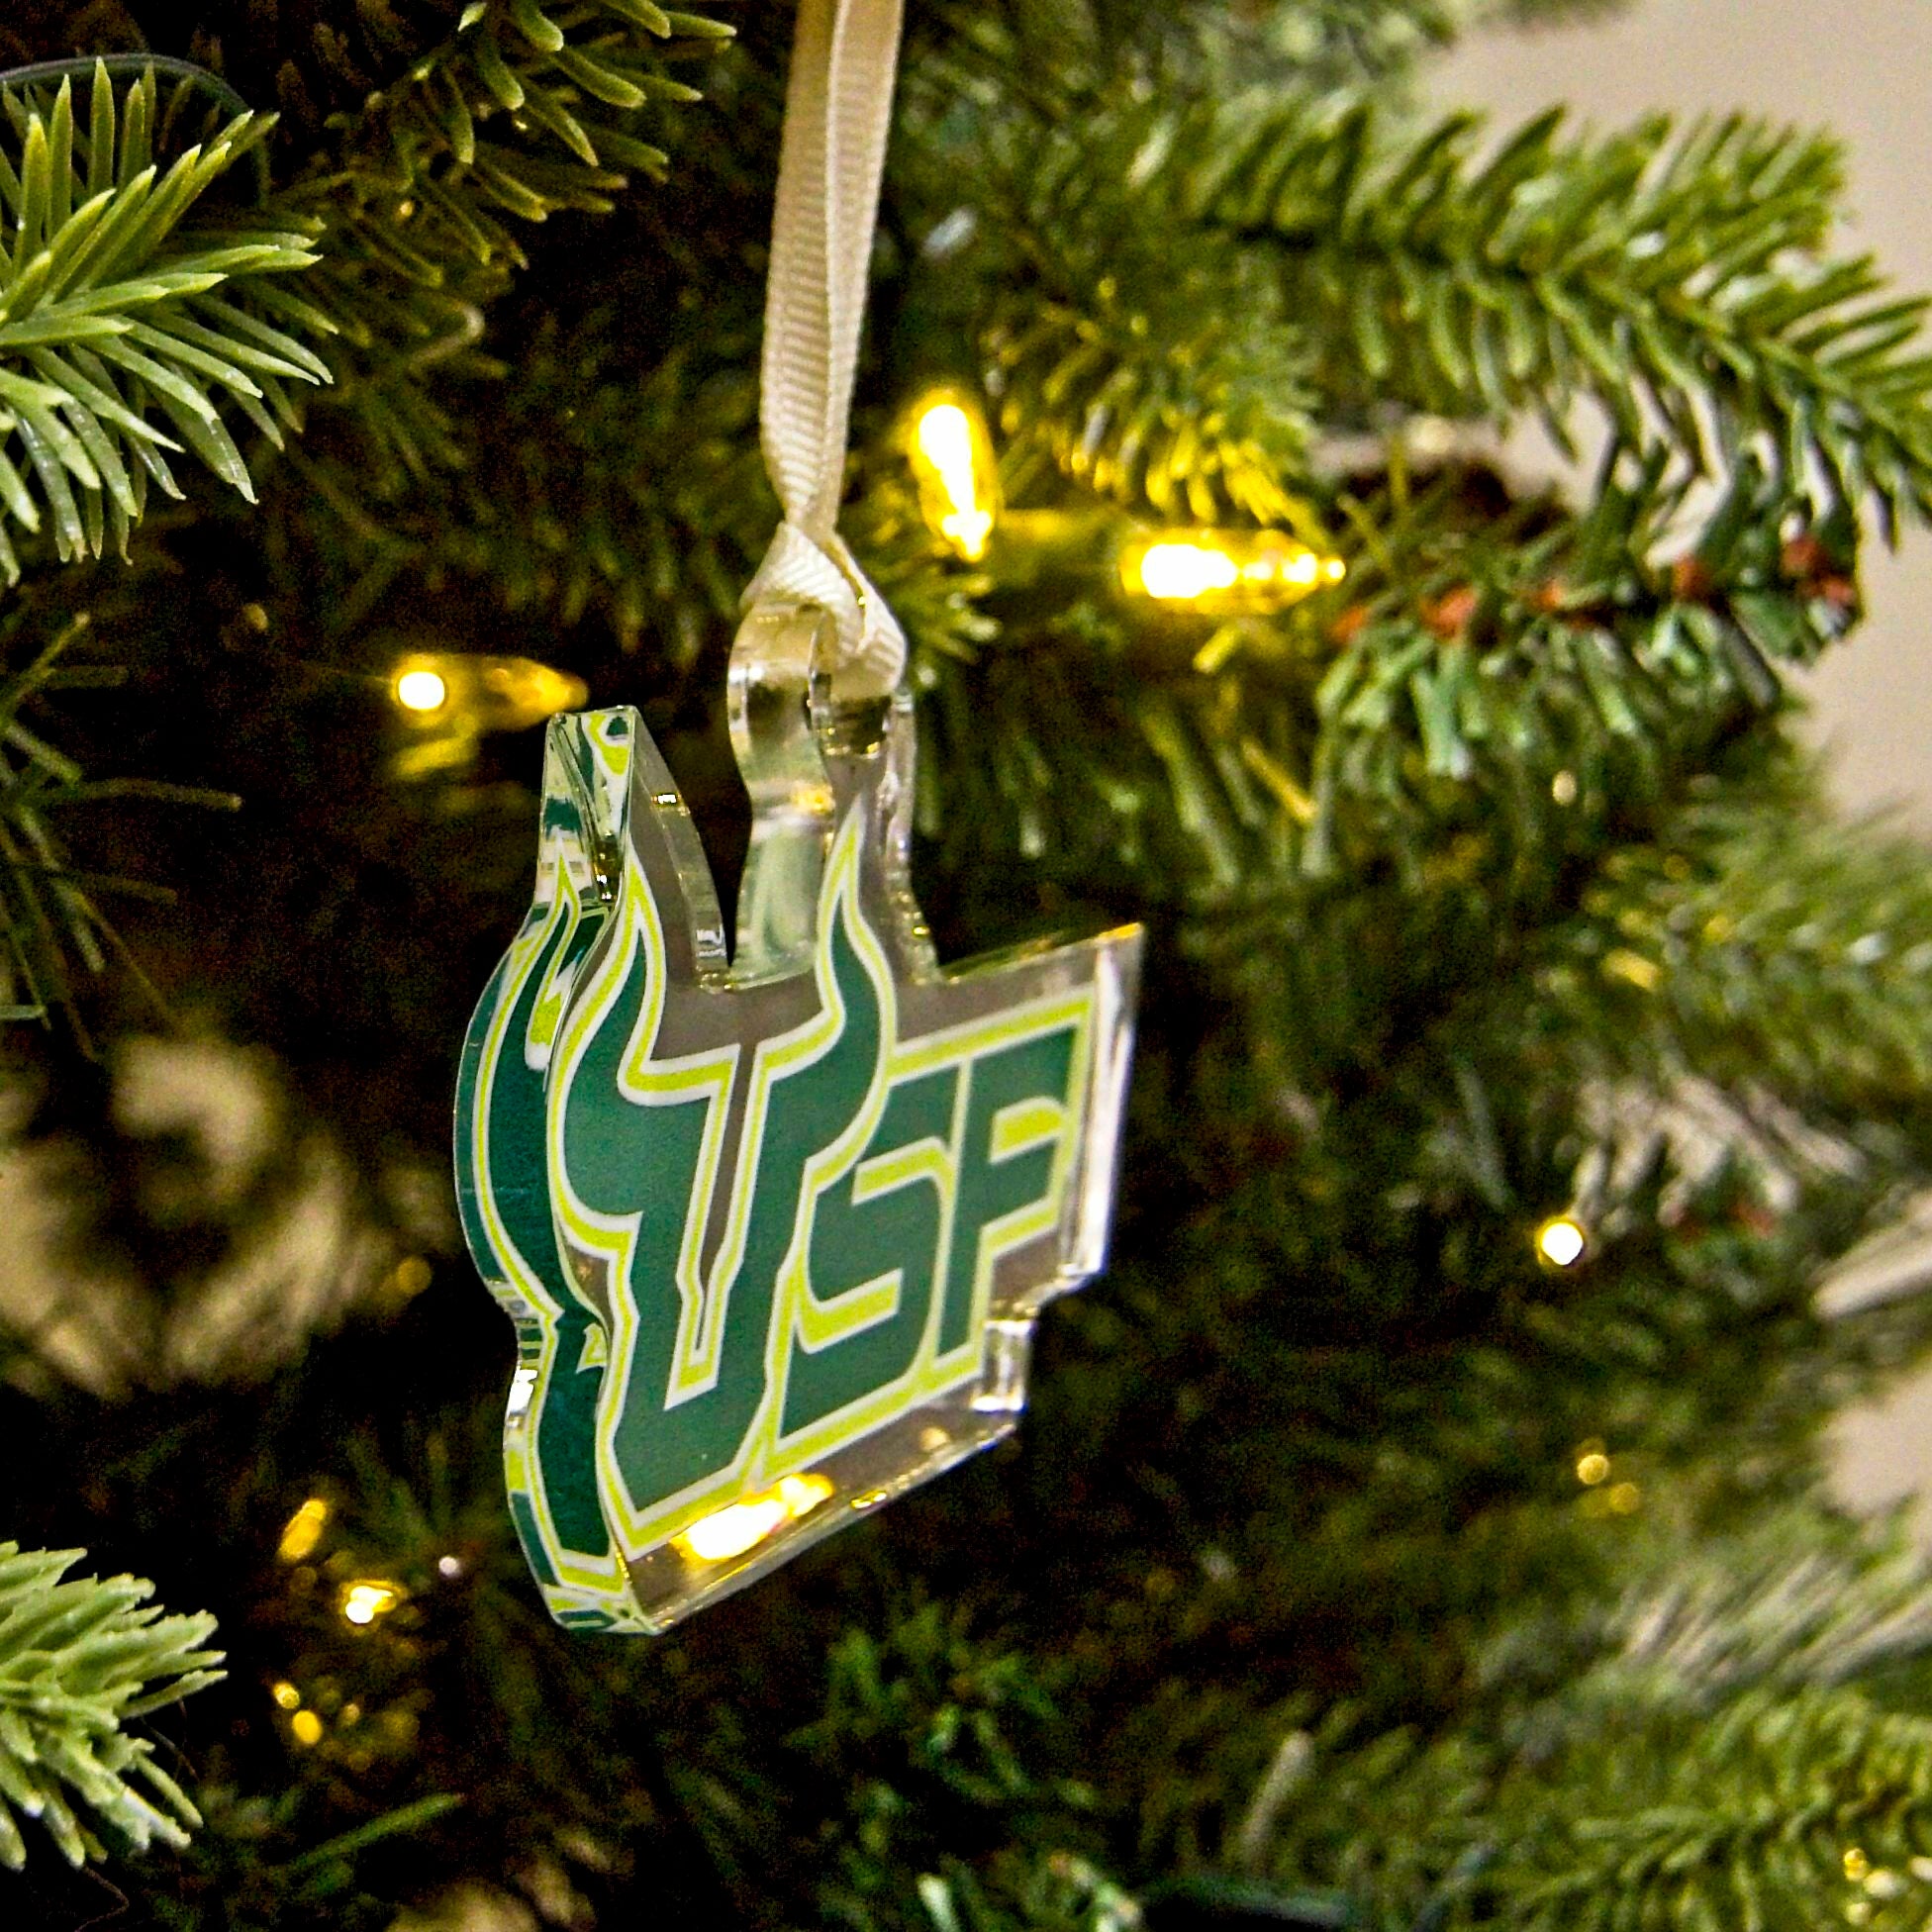 USF Bulls - USF Athletic Ornament & Bag Tag